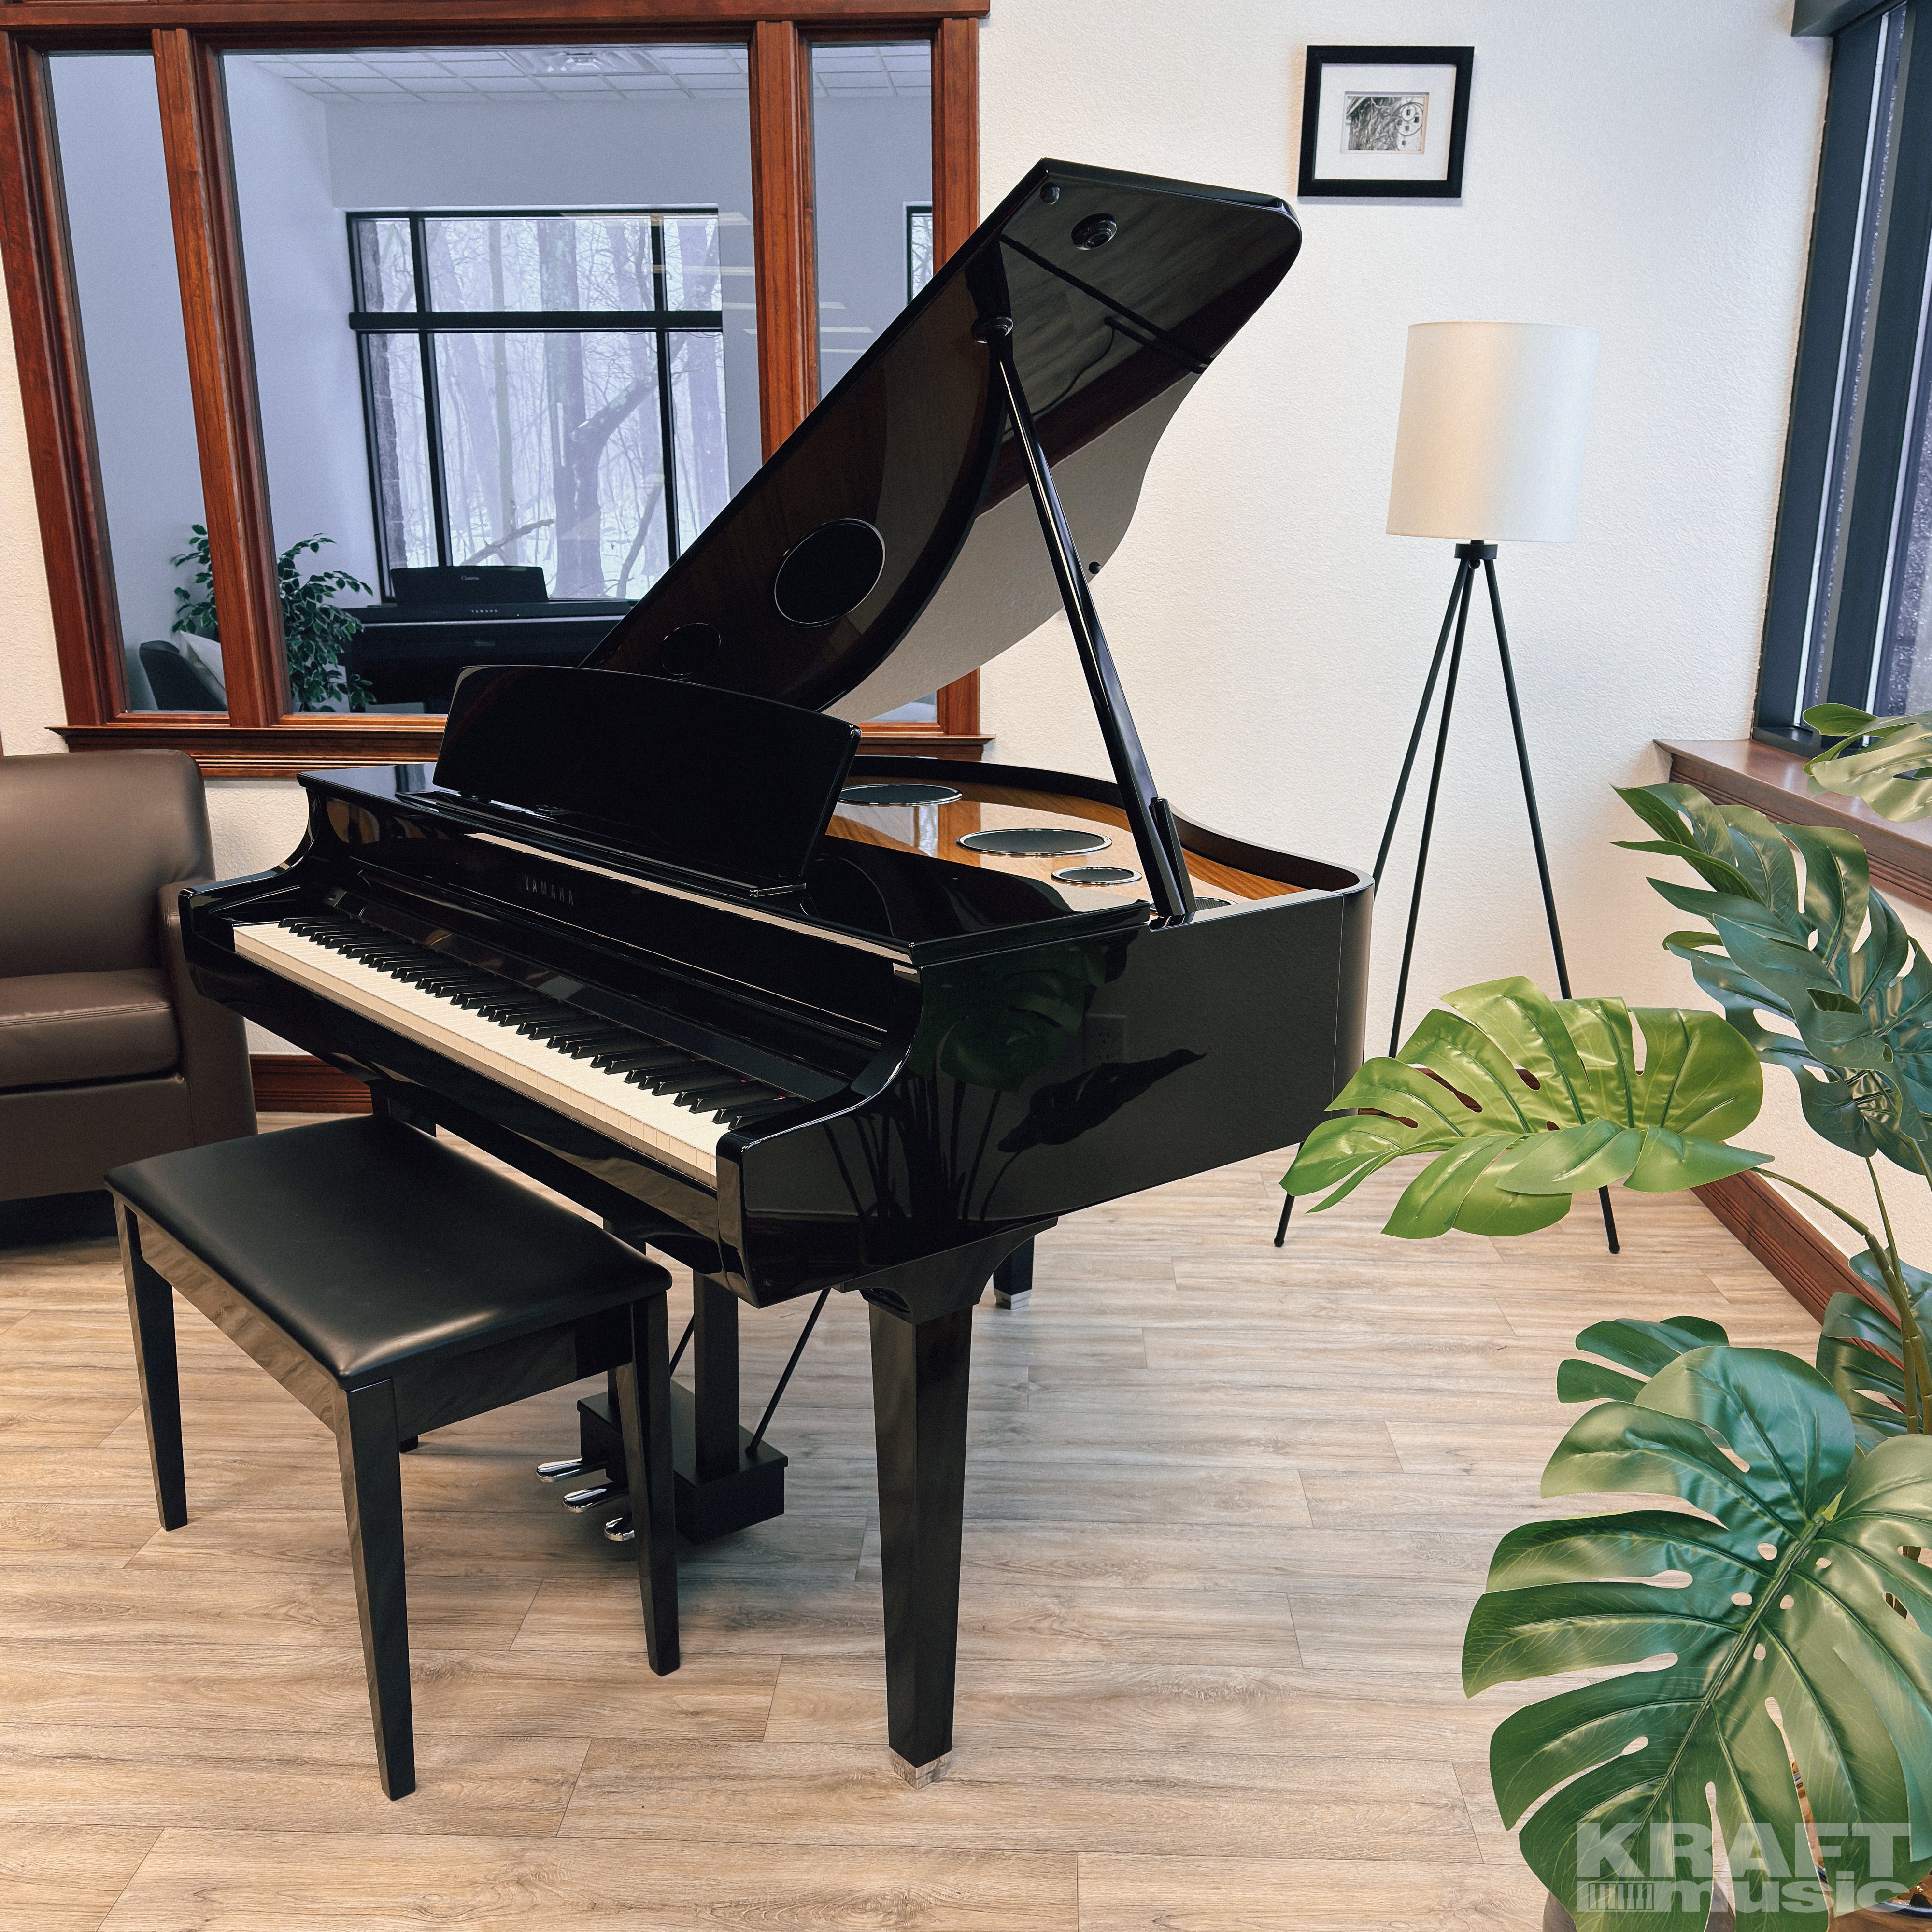 Yamaha Clavinova CSP-295GP Digital Grand Piano - Polished Ebony - in a stylish music room facing left with lid up